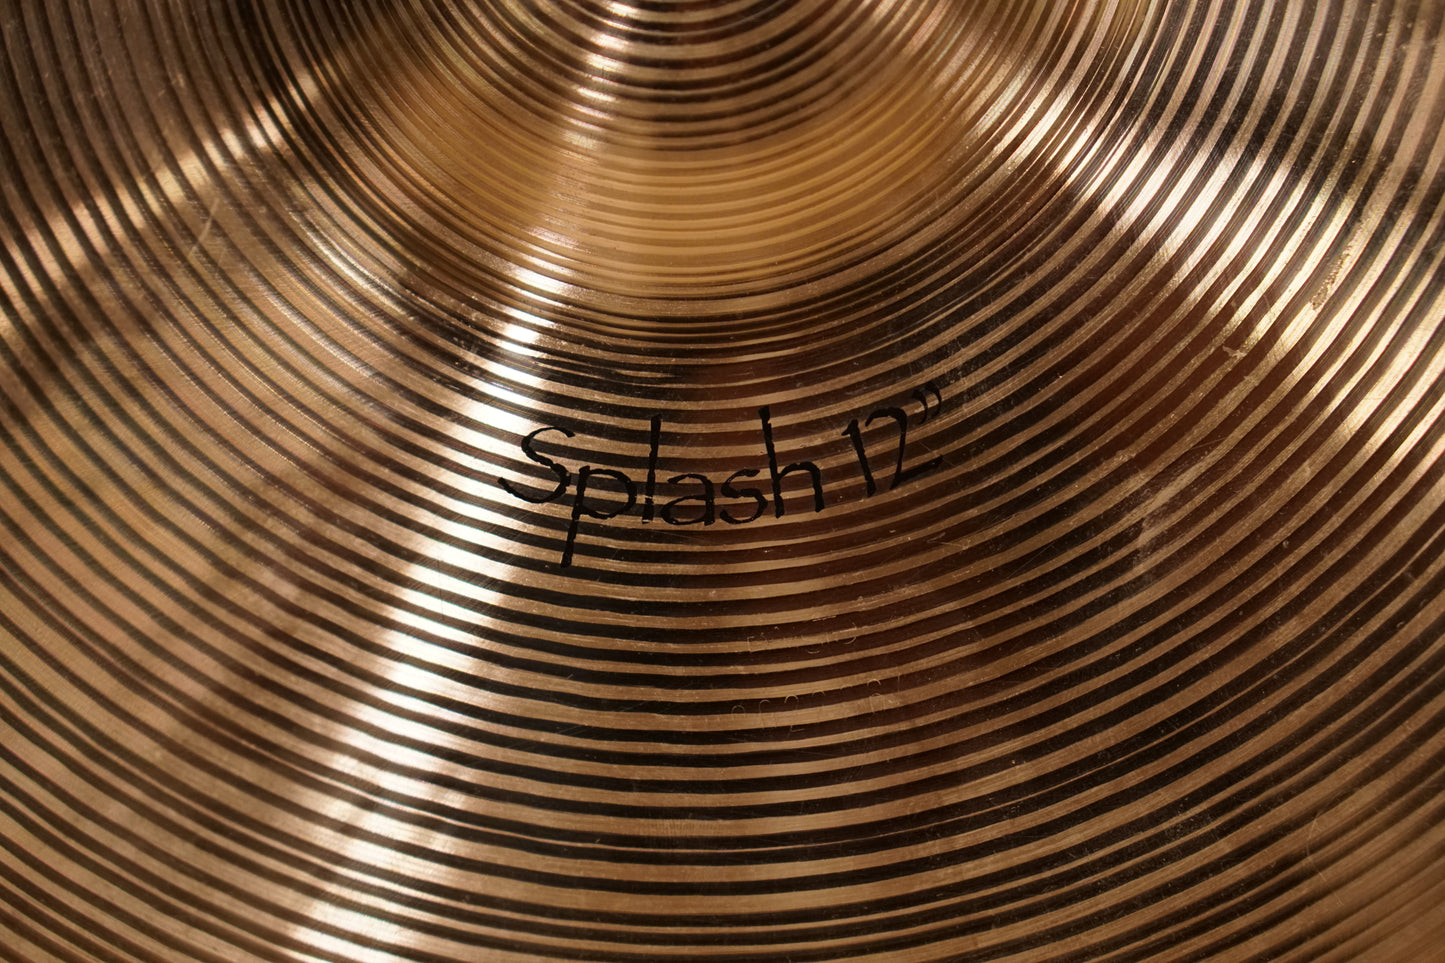 Paiste 12" Signature Splash Cymbal - 430g